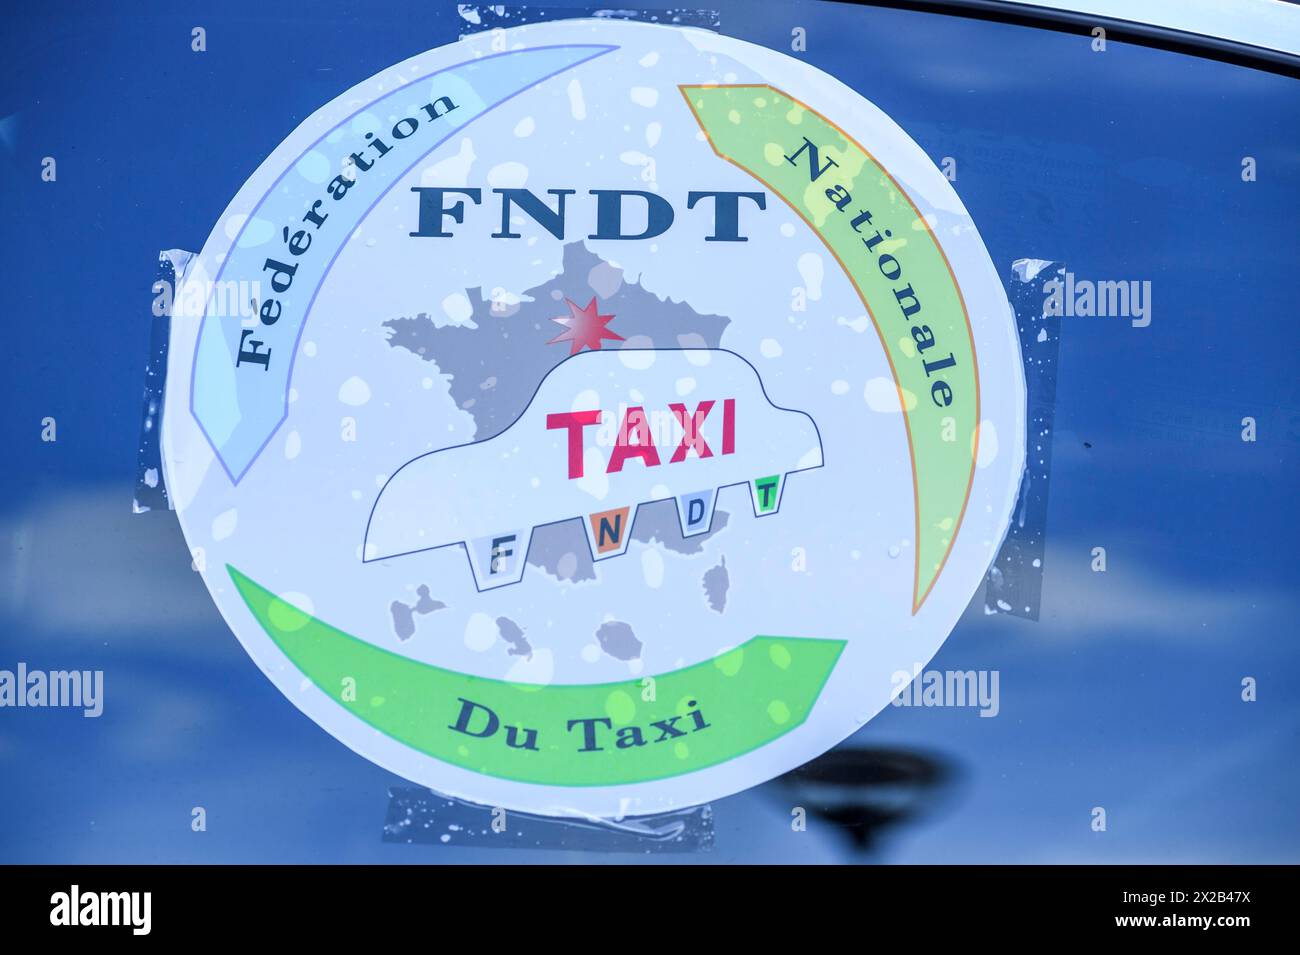 Fédération nationale du taxi auto-collant | Taxi national federation sticker Stock Photo